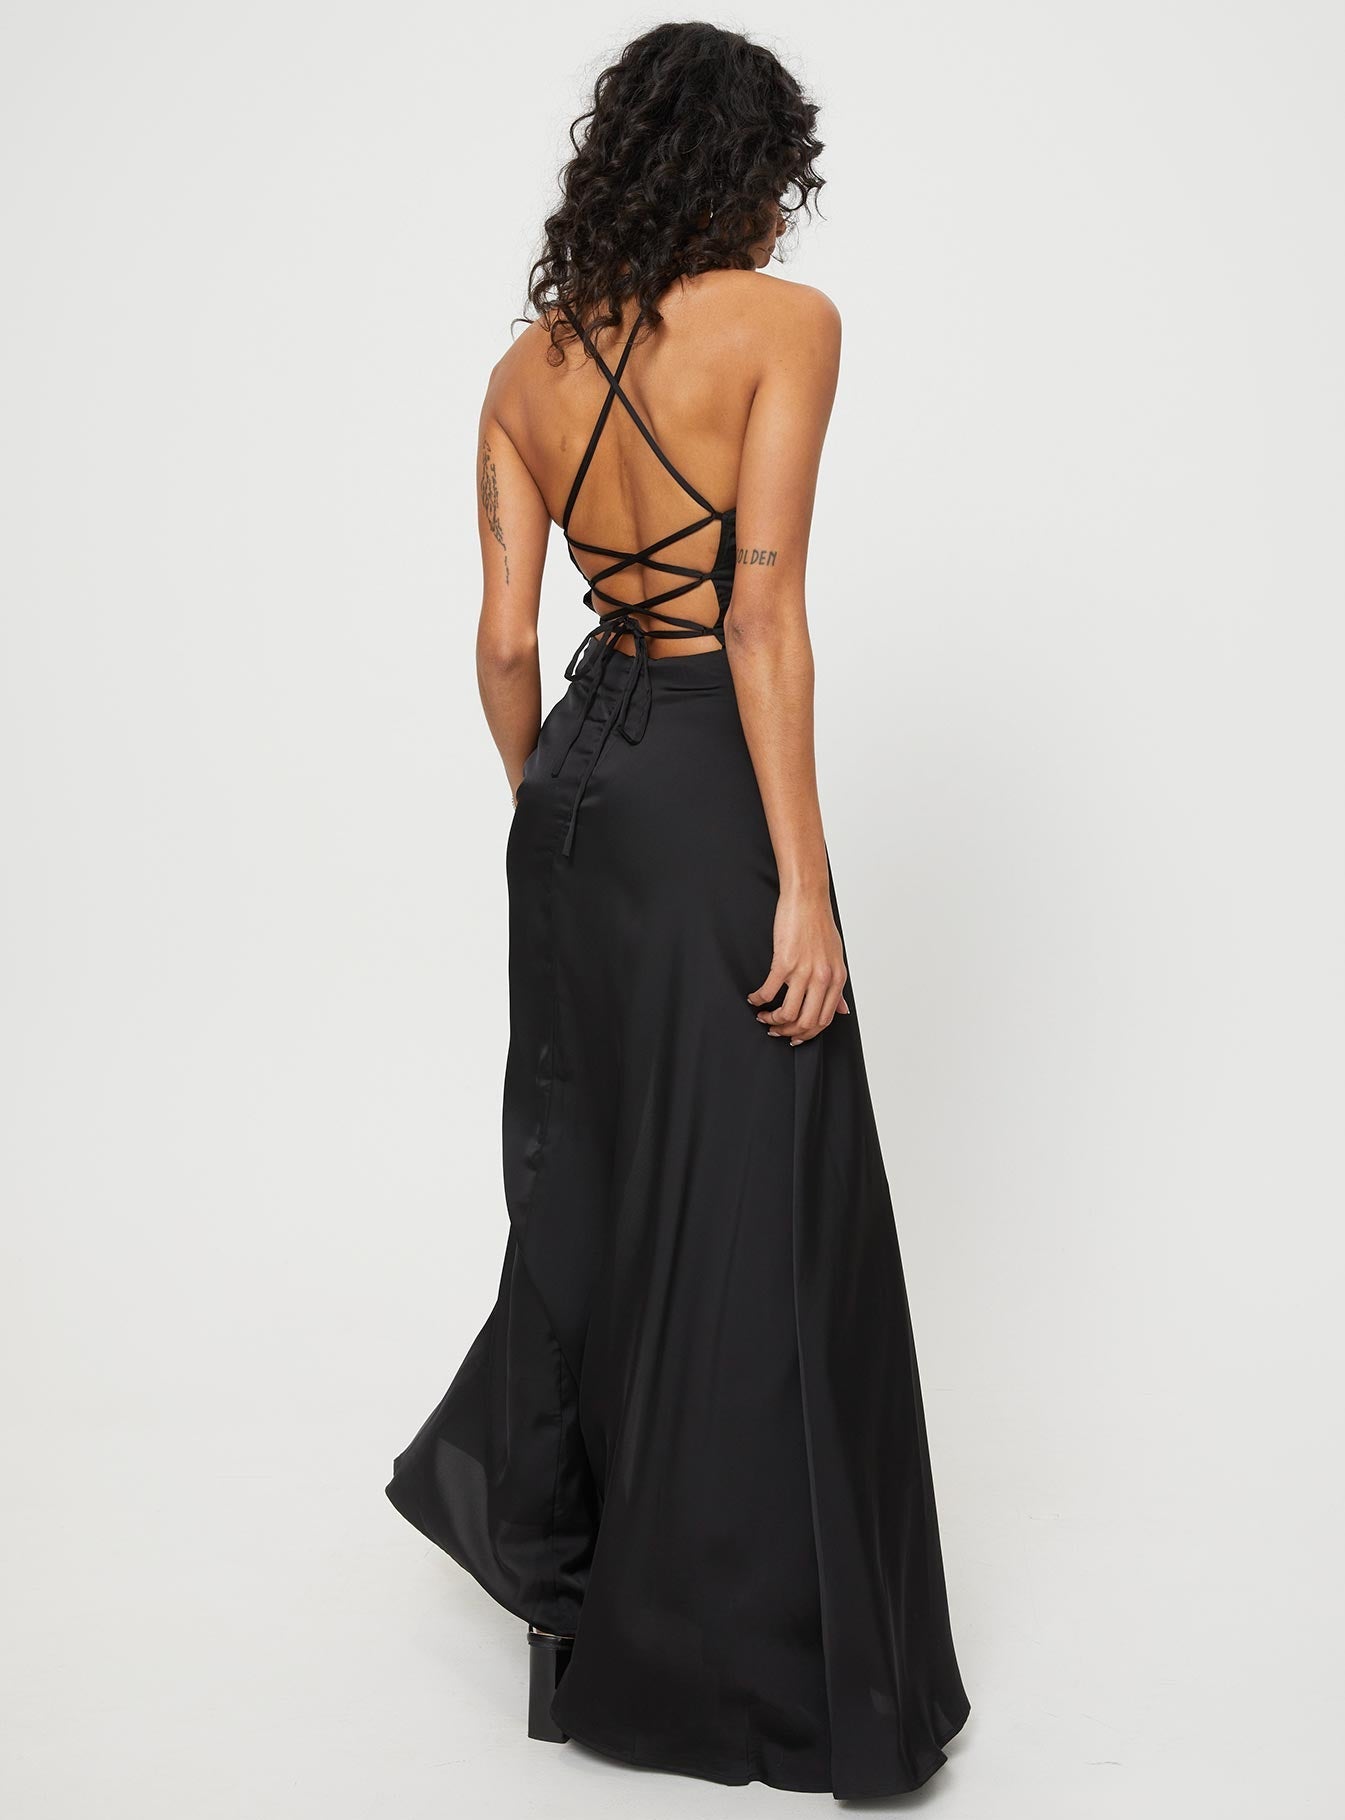 Shop Formal Dress - Kerwin Maxi Dress Black secondary image